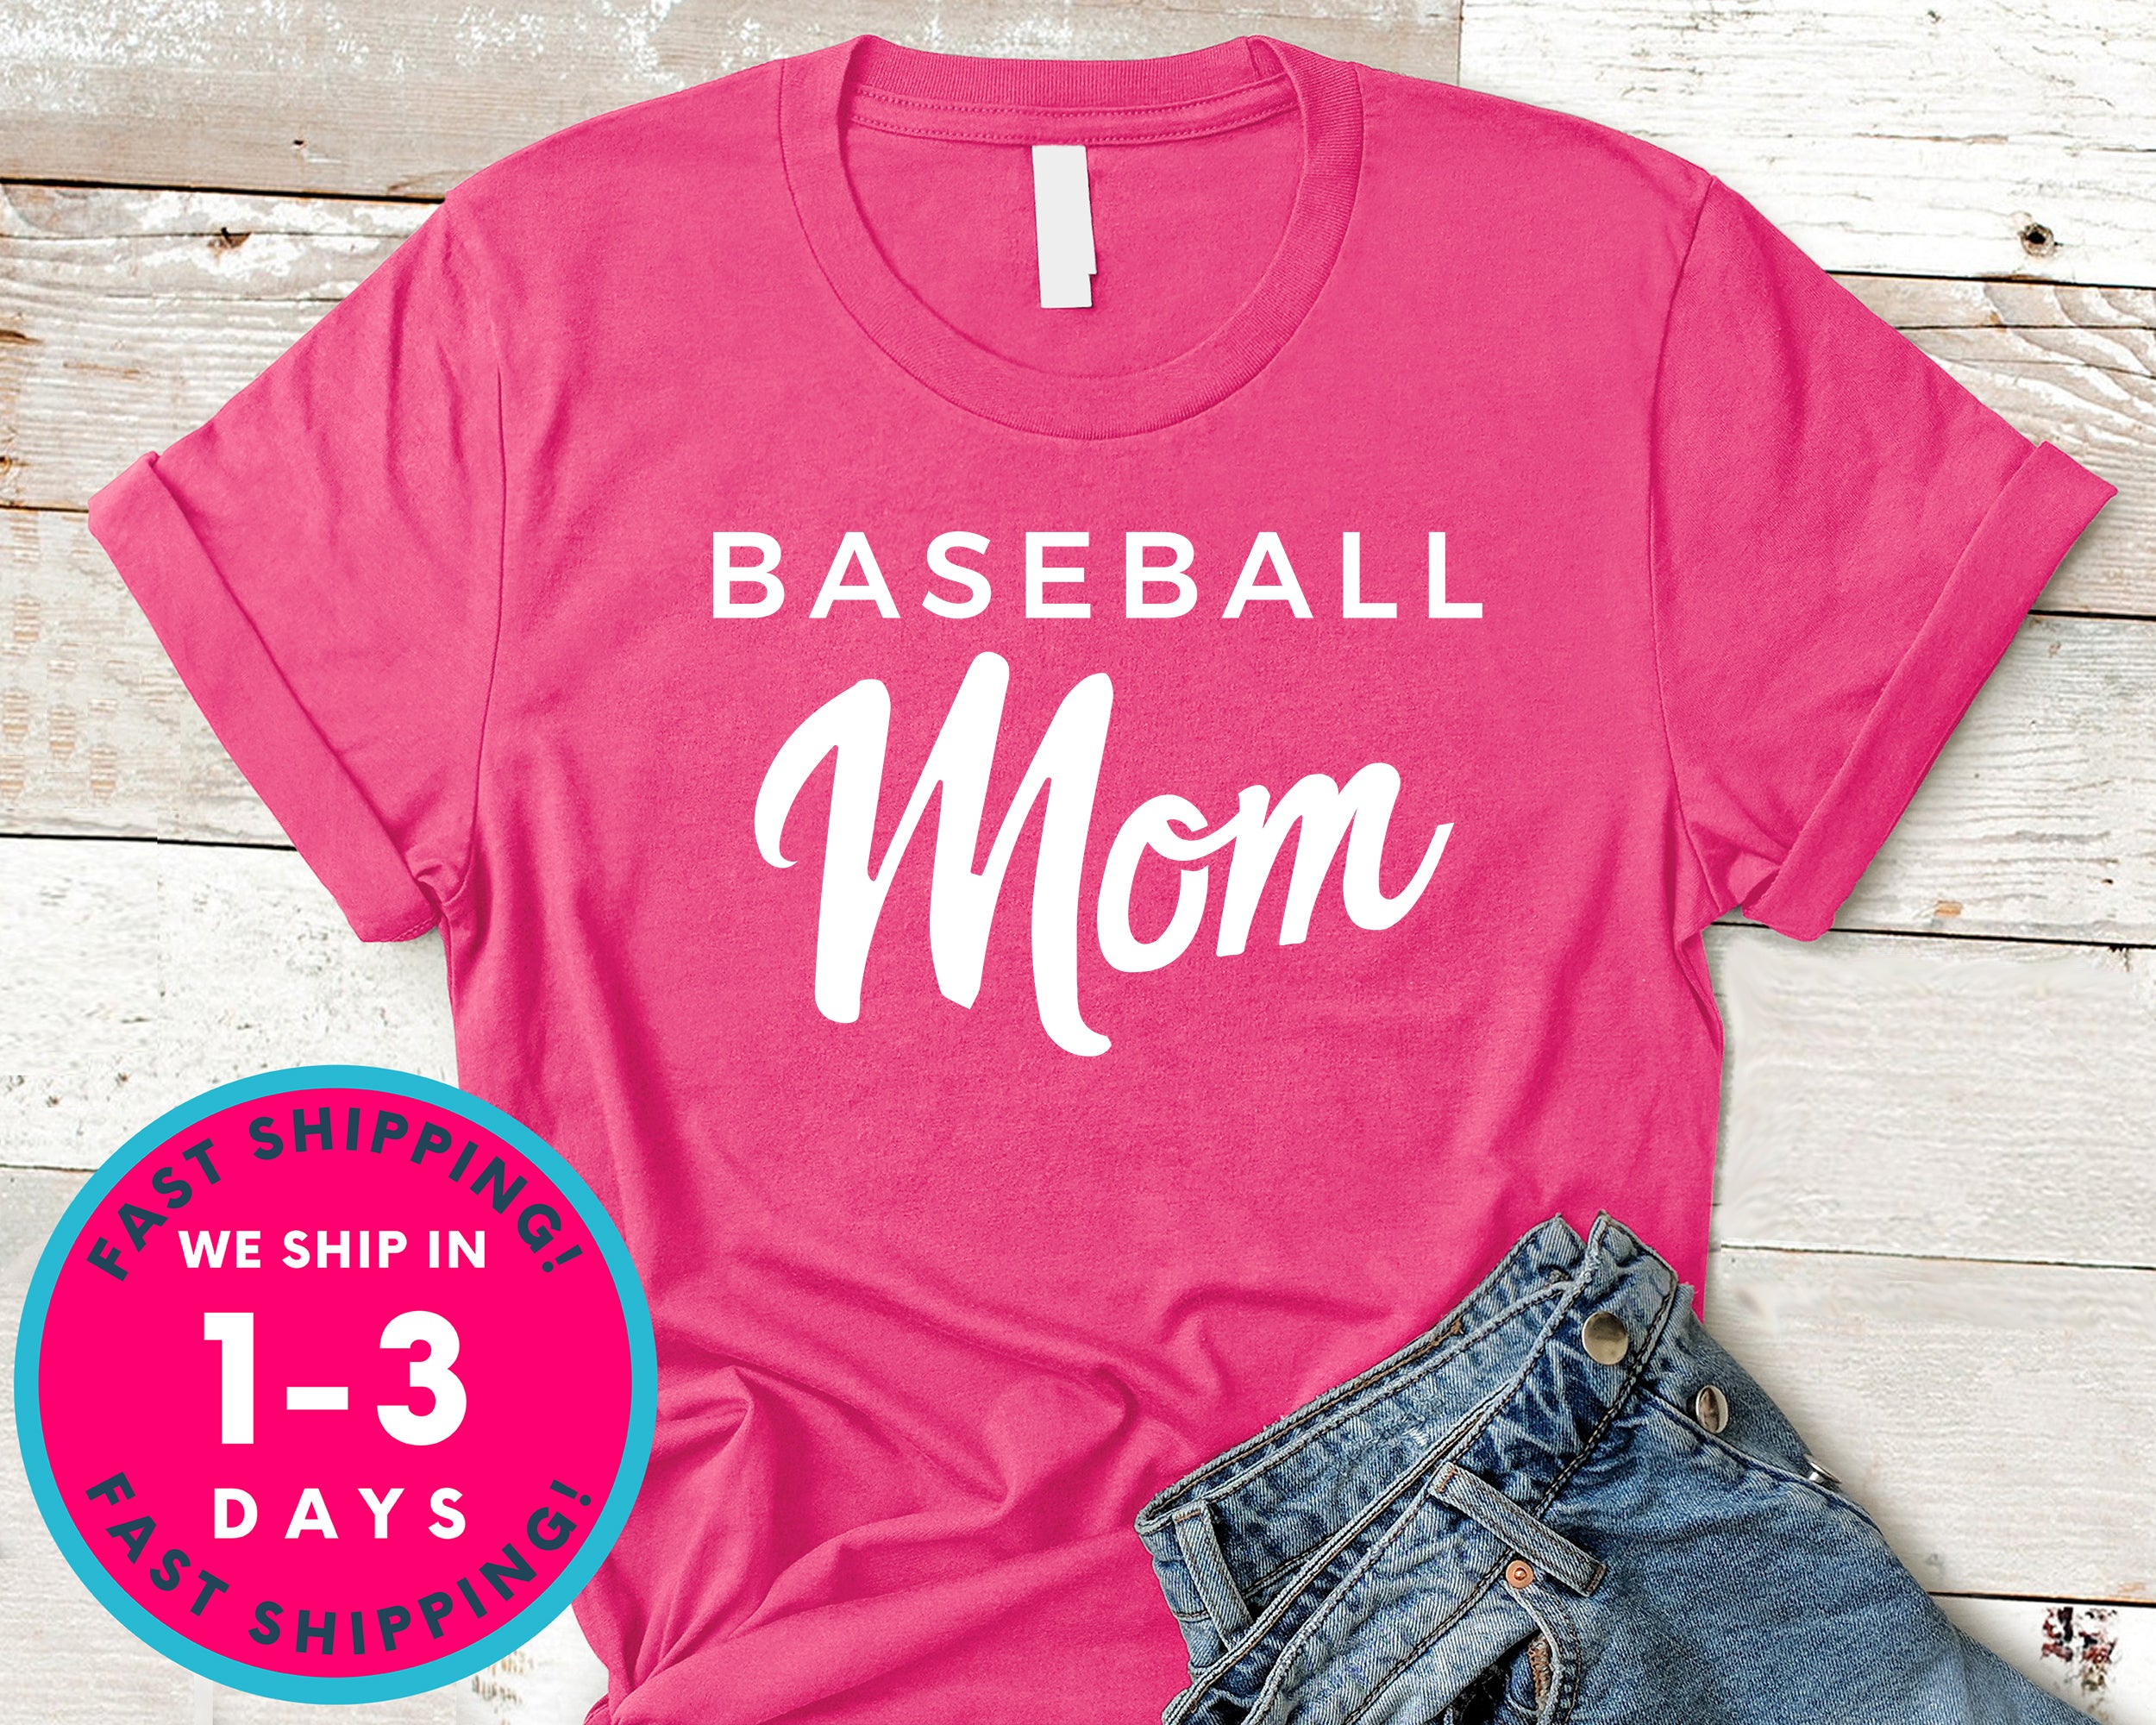 Bwomen Baseball Mom Tee T-Shirt - Sports Shirt